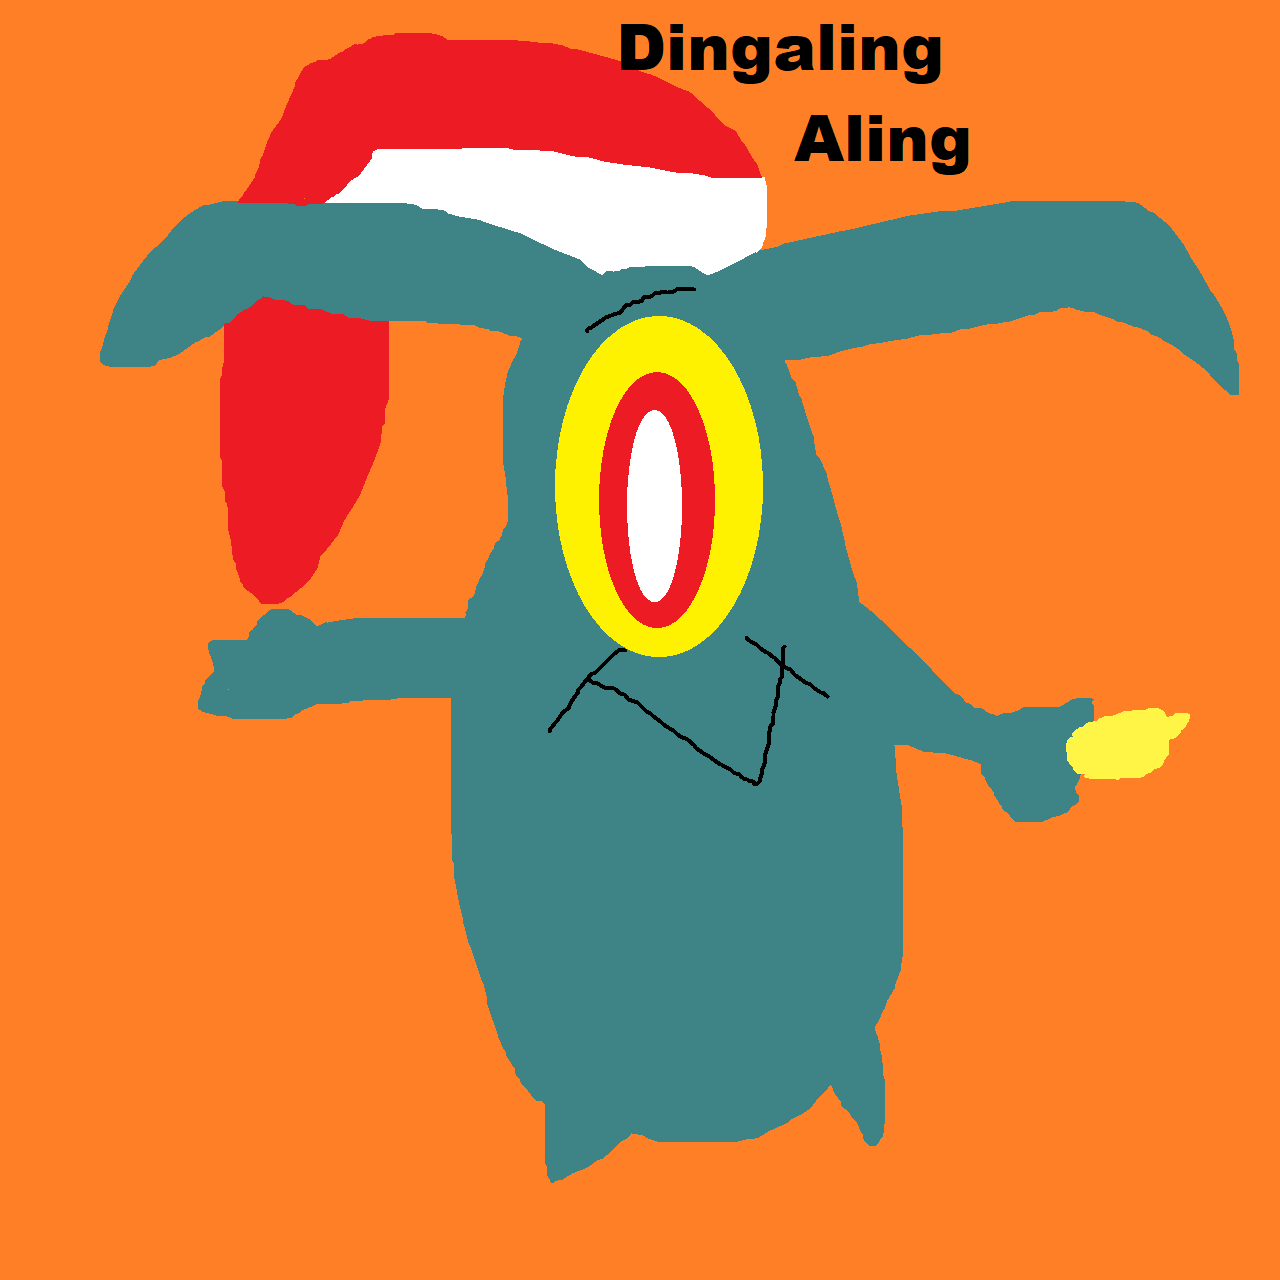 Dingaling Aling by Falconlobo